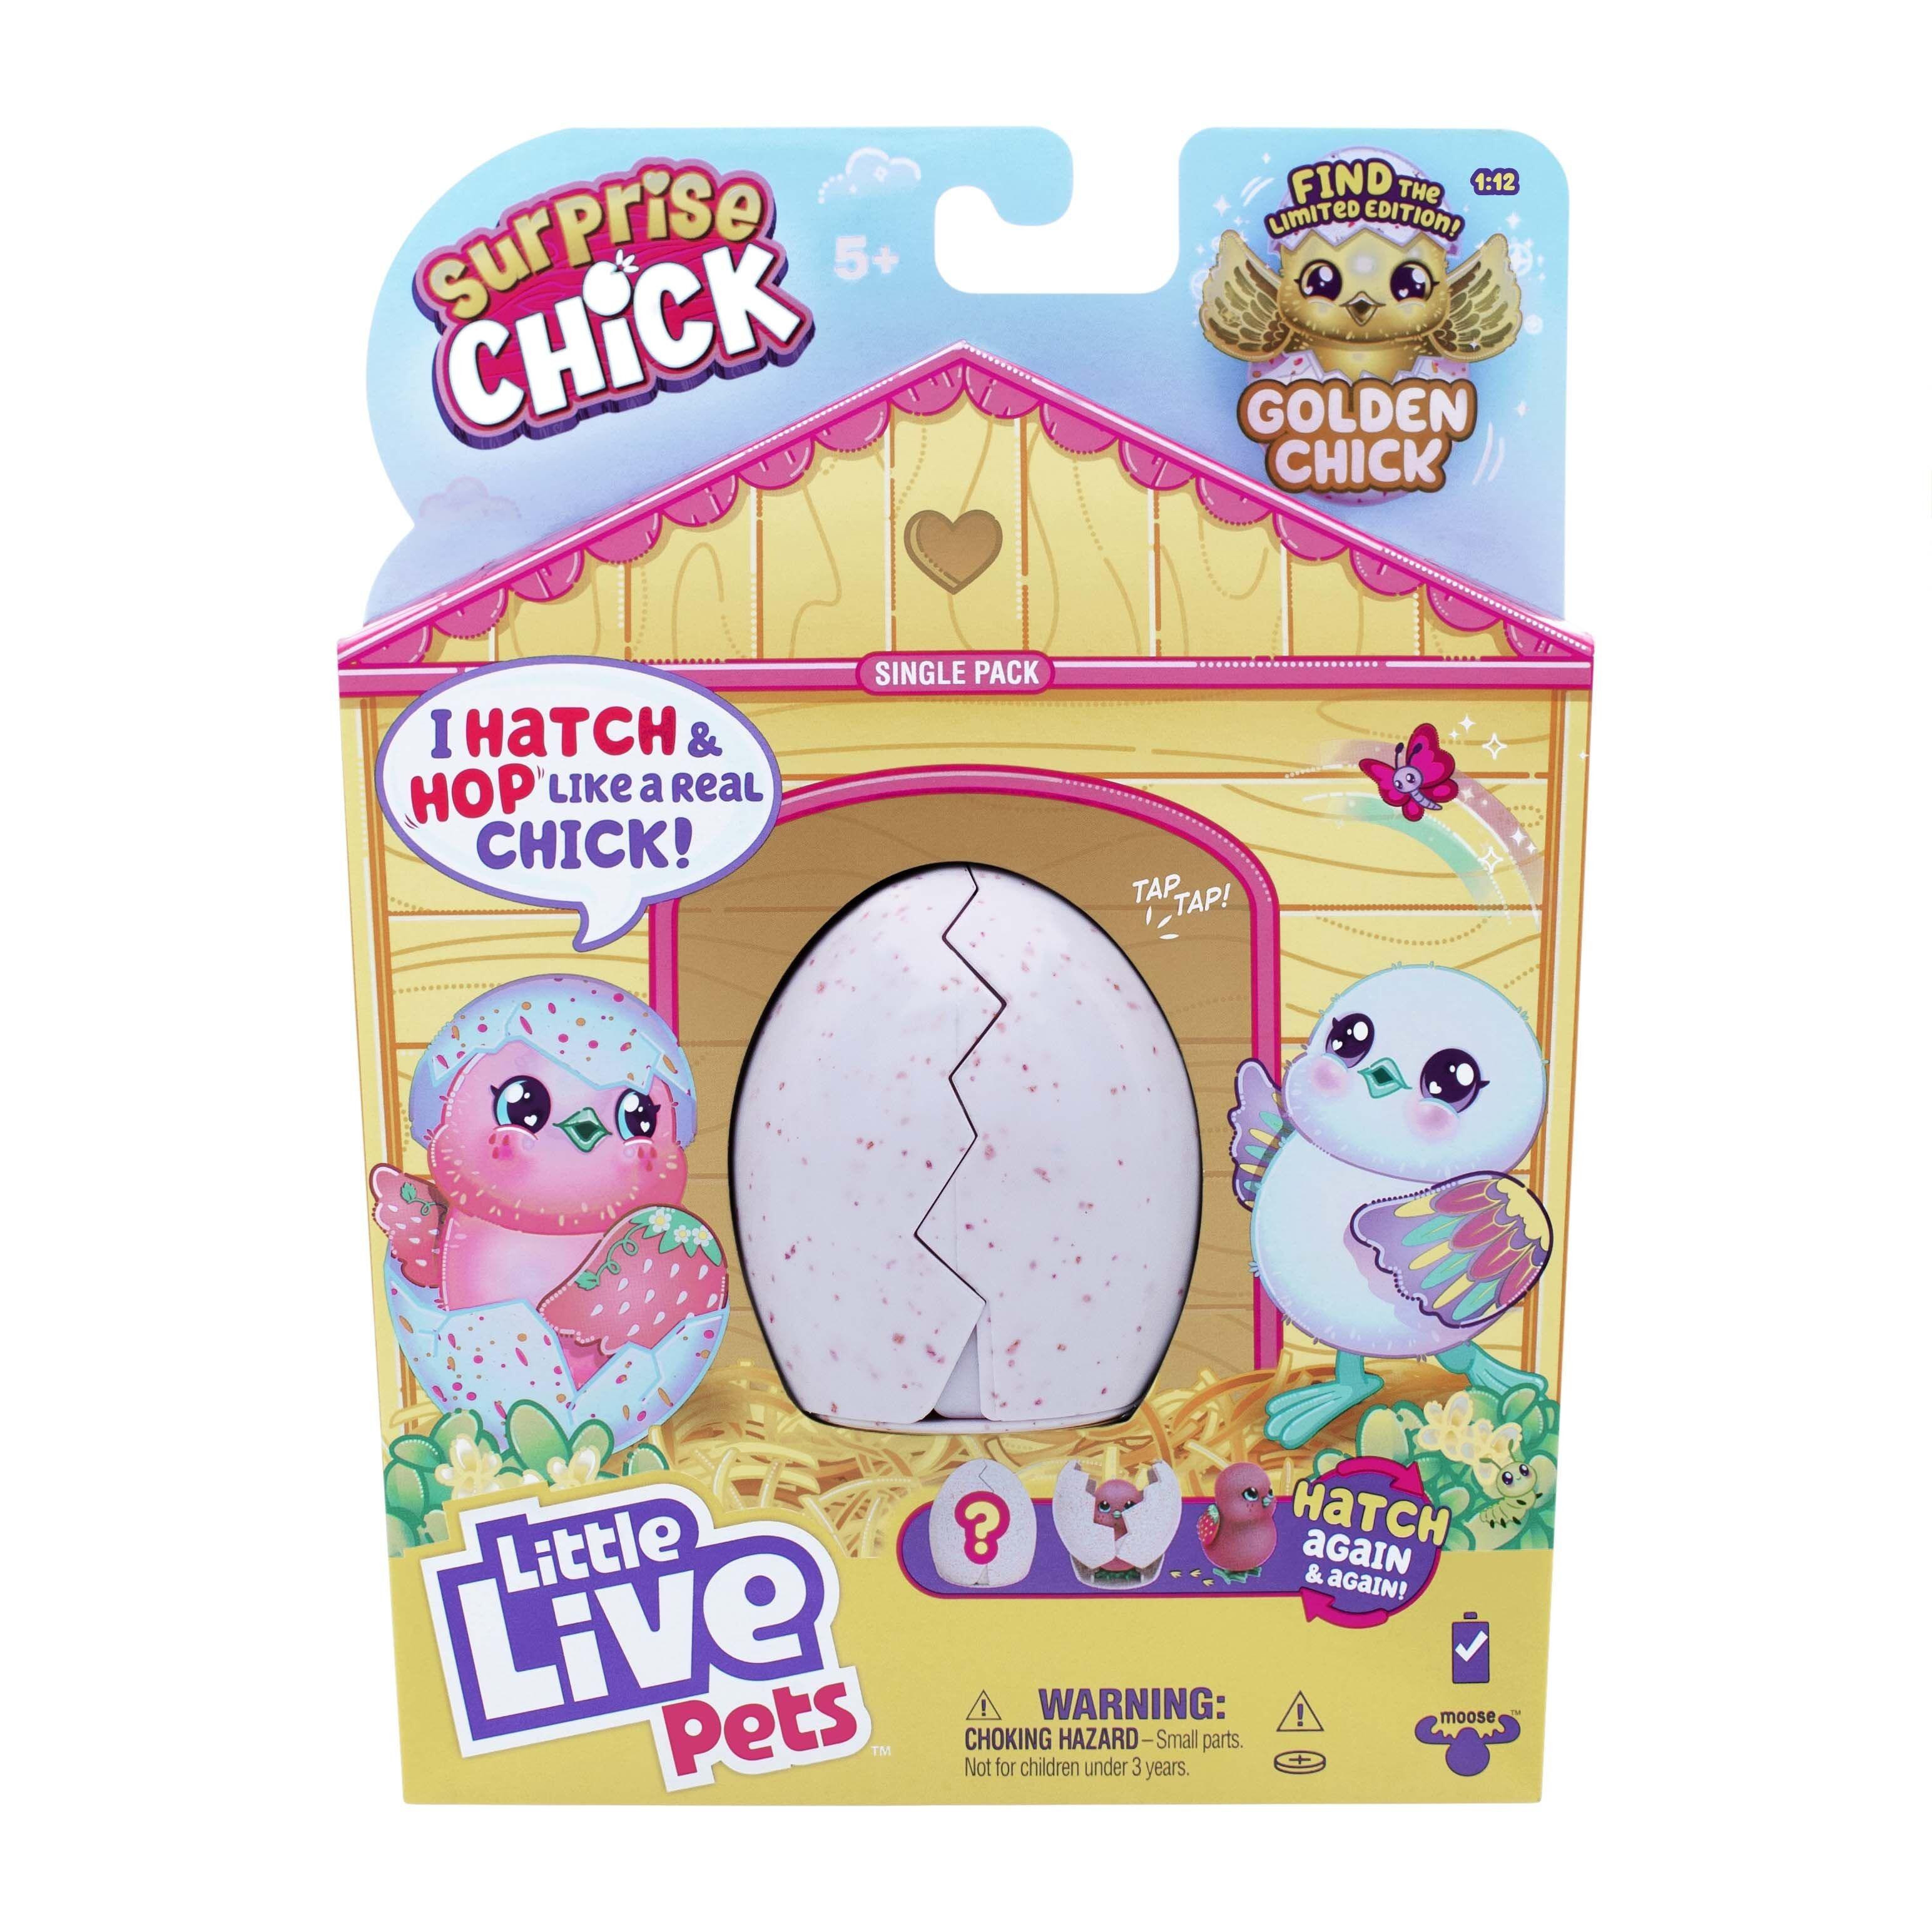 Little Live Pets Surprise Chick Pink Series 4